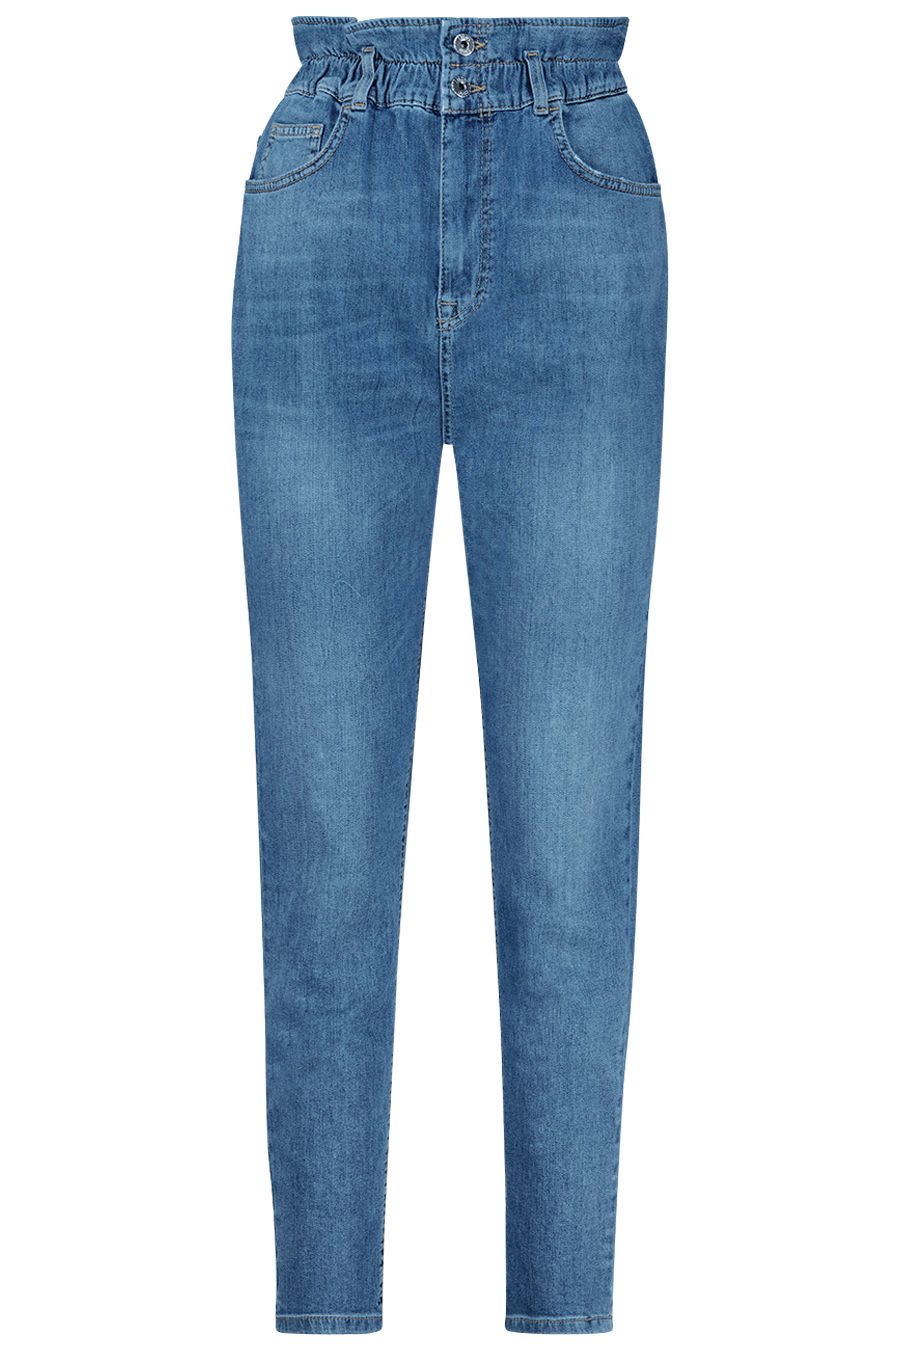 firusas.com_Liu Jo_high waist jeans_EUR 184